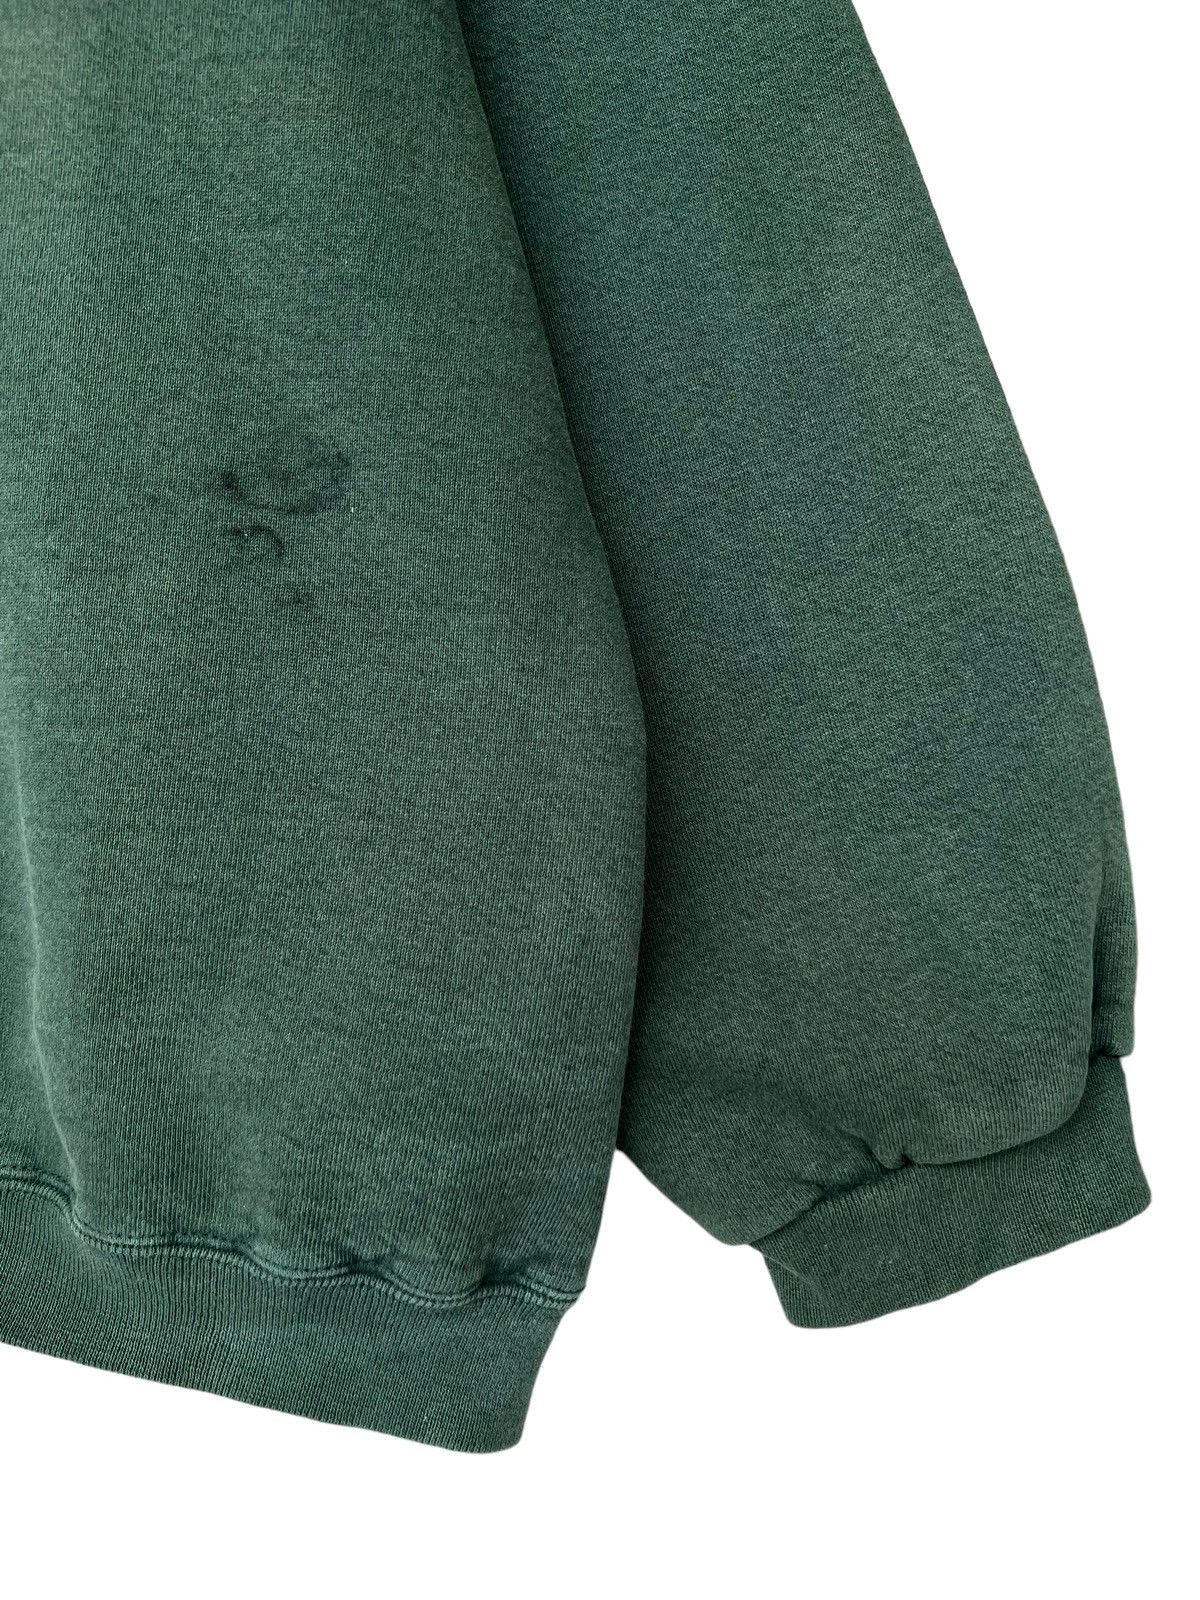 Vintage 90s Adidas Trefoil Biglogo Green Baggy Sweatshirt - 7